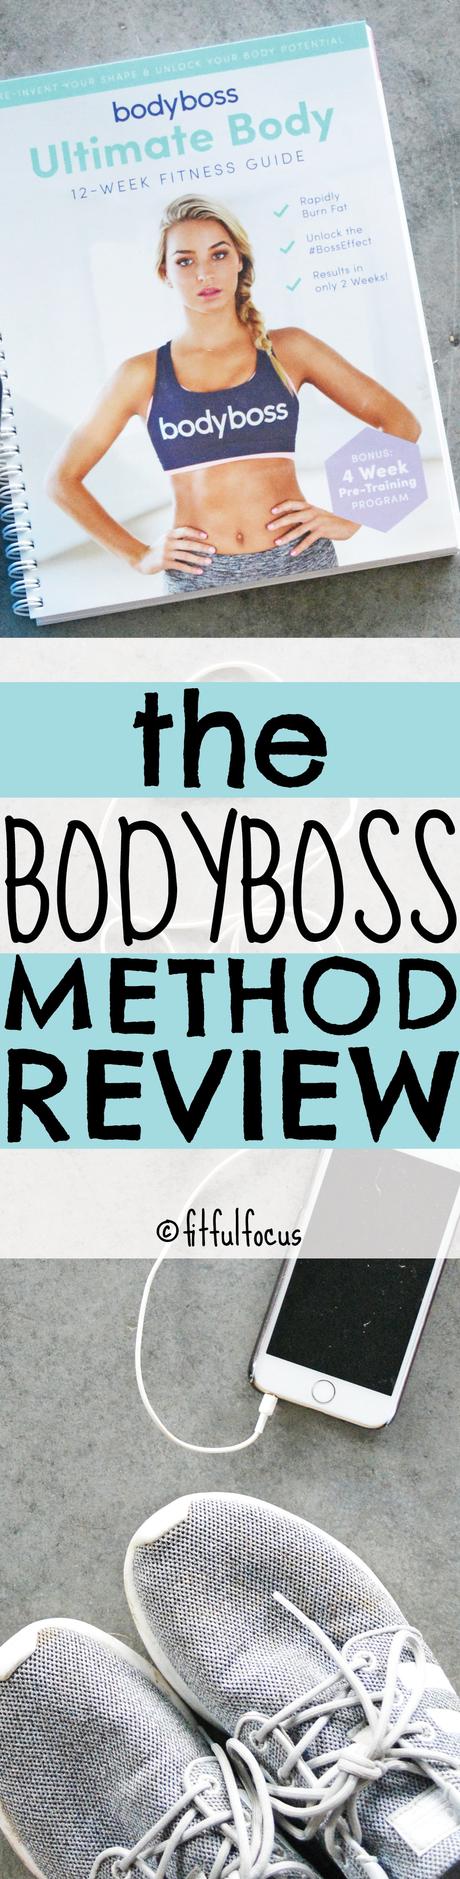 The BodyBoss Method Review